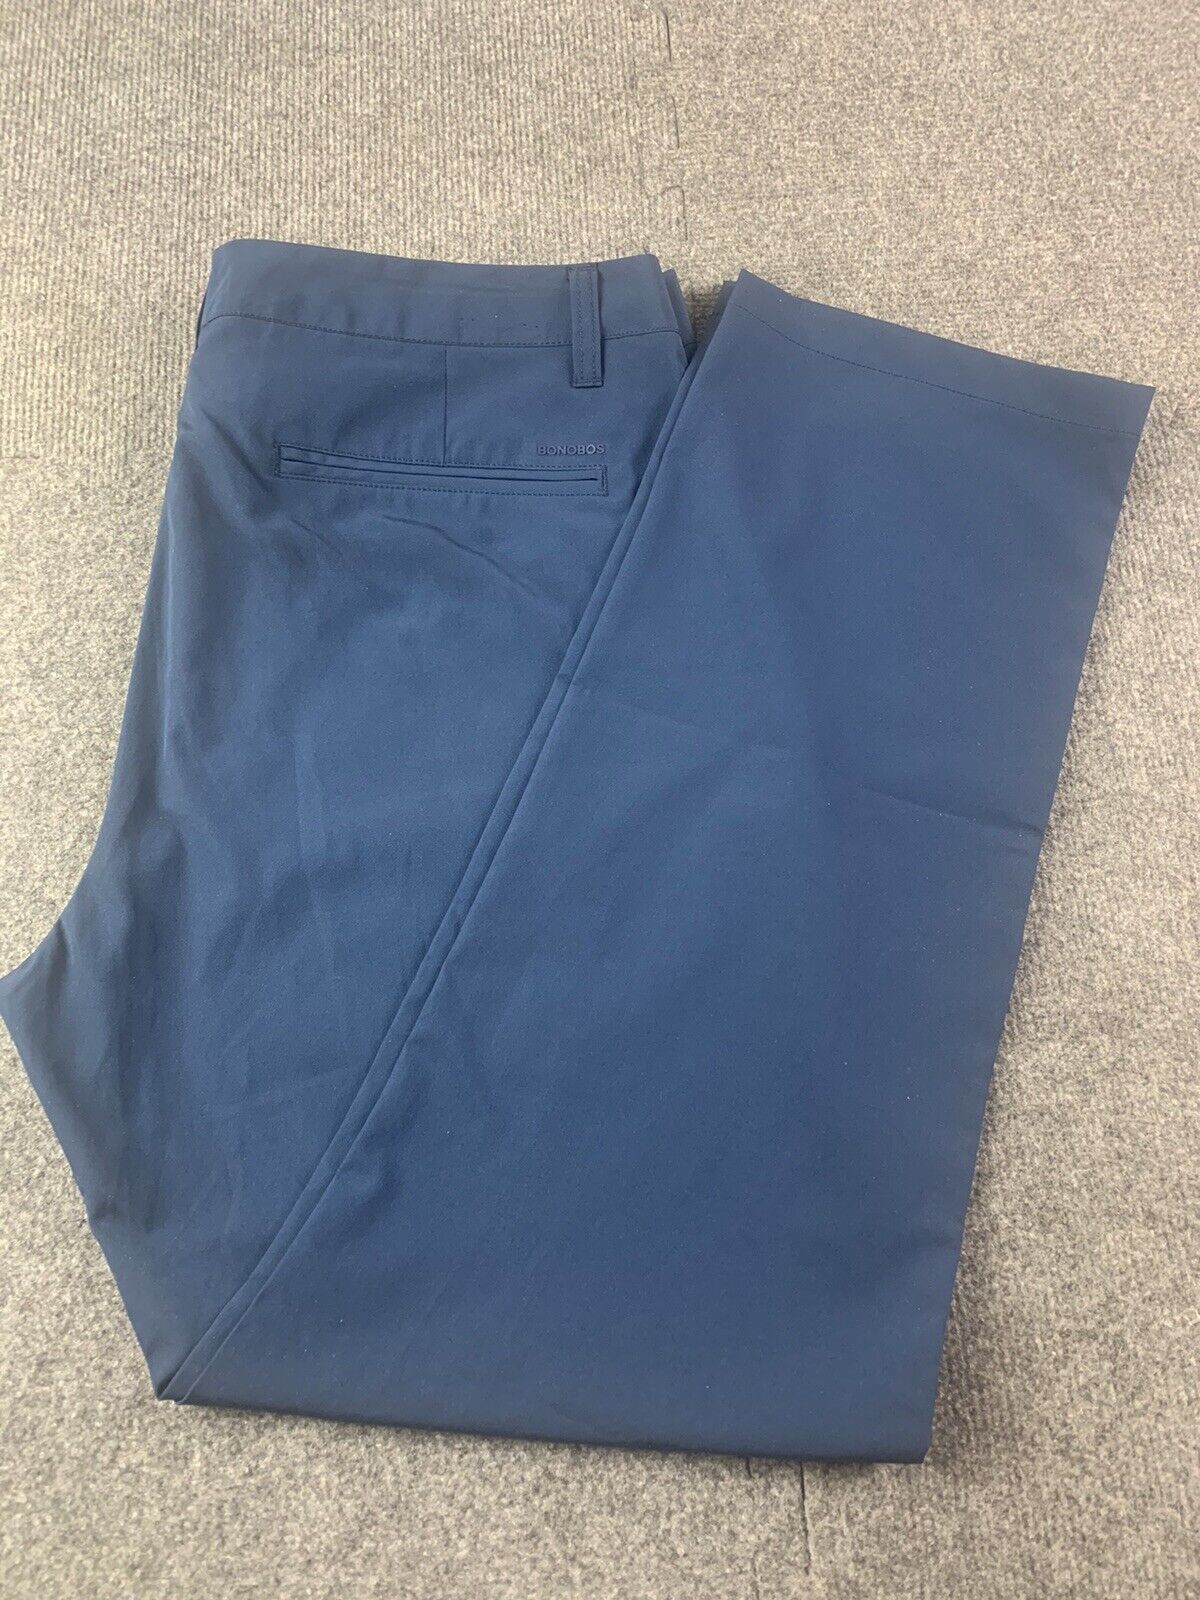 Bonobos Golf Slim Mens Flat Front Golf Pants Size 36x30 Blue